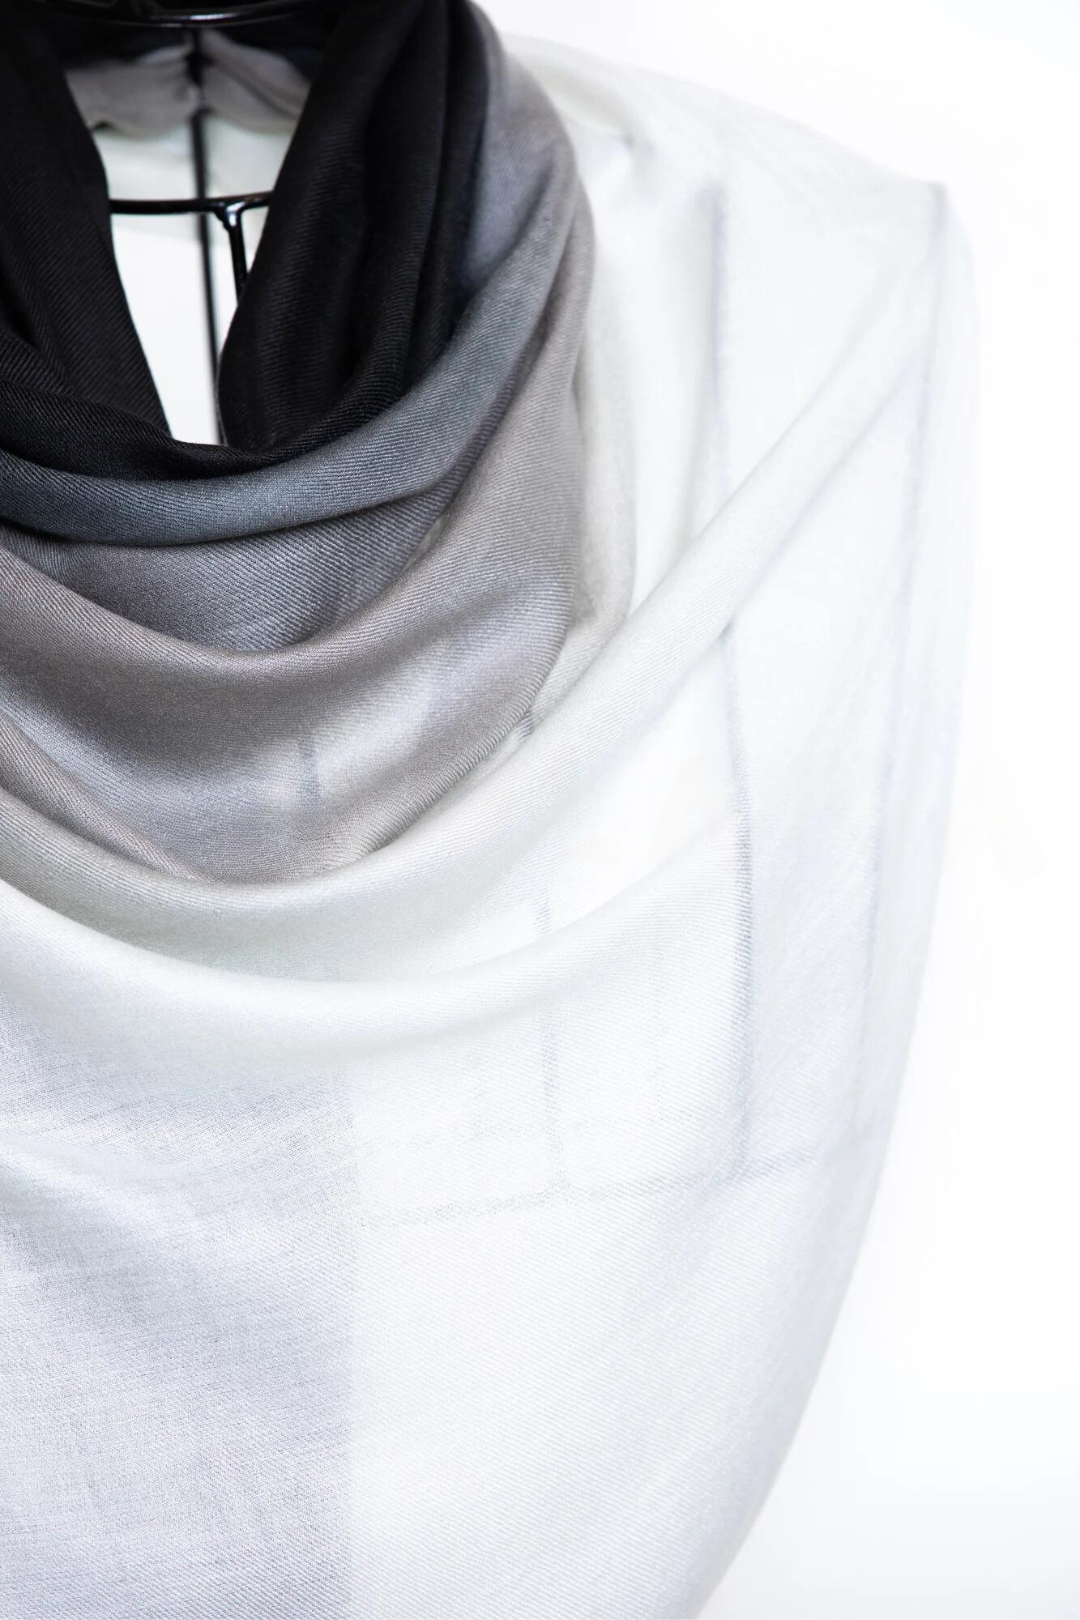 Ombre Three Colors Printed Mo-shmere Shawls - Black Silver White